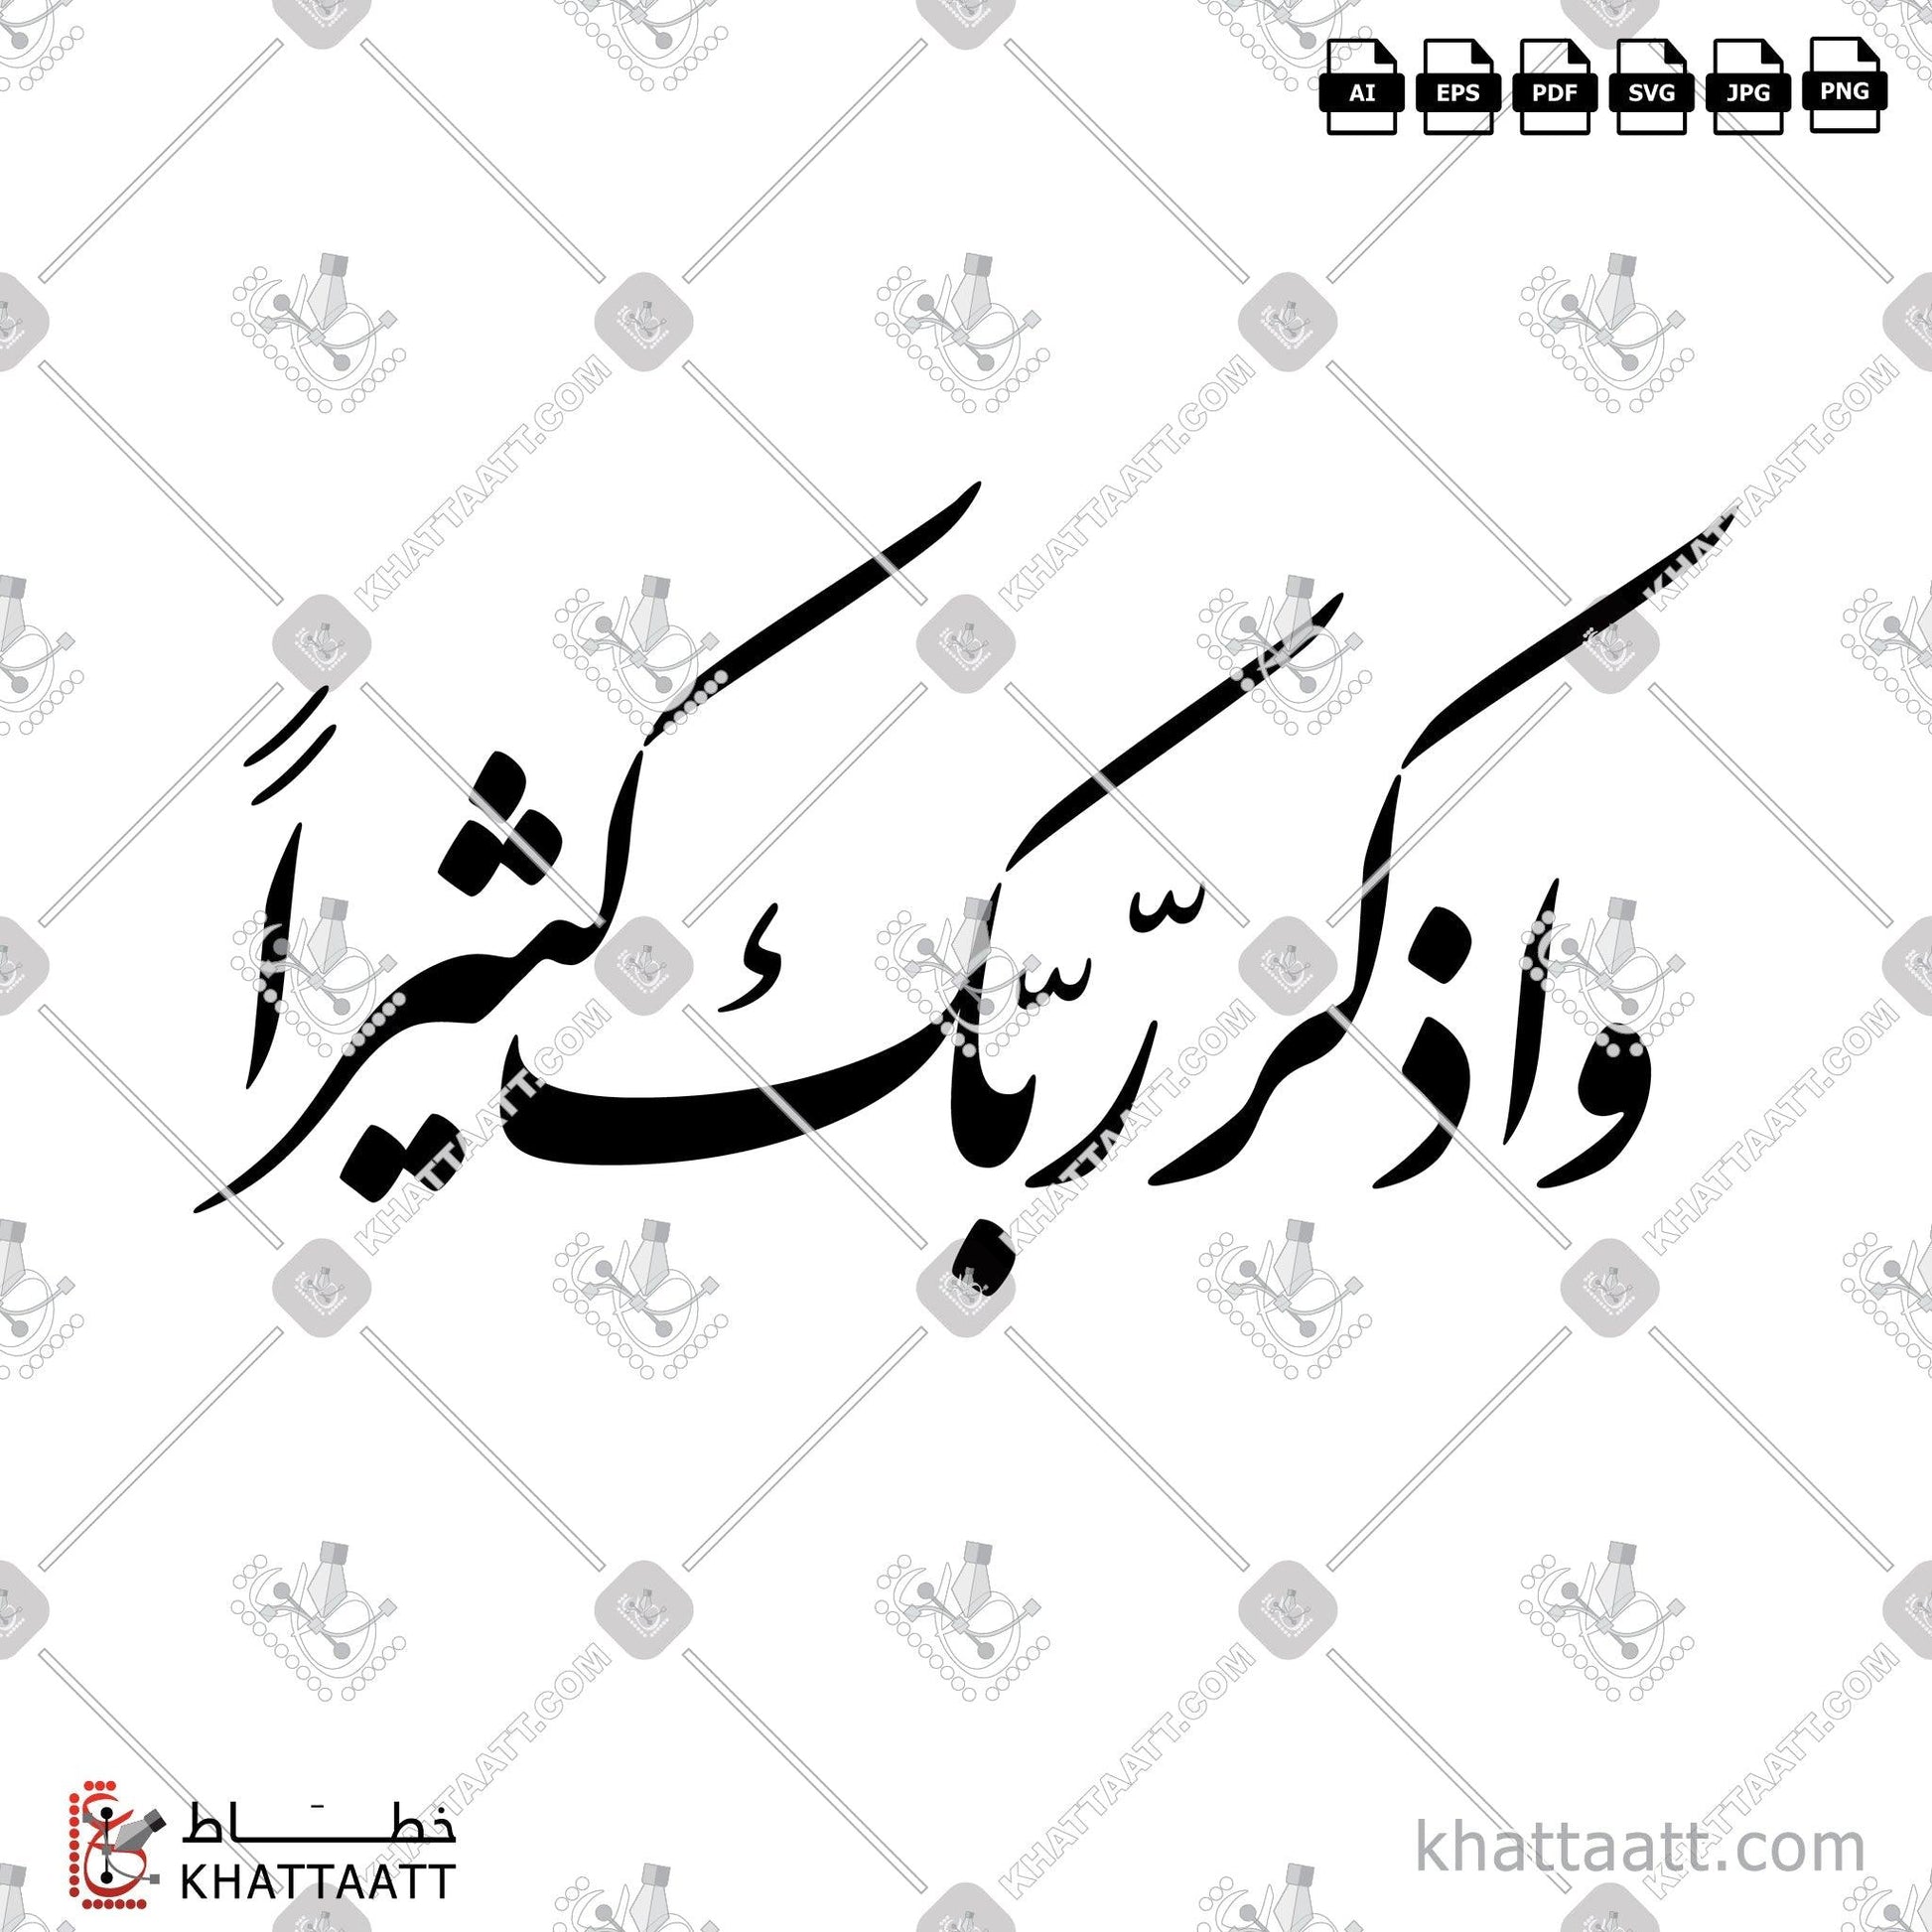 Download Arabic Calligraphy of واذكر ربك كثيرا in Farsi - الخط الفارسي in vector and .png